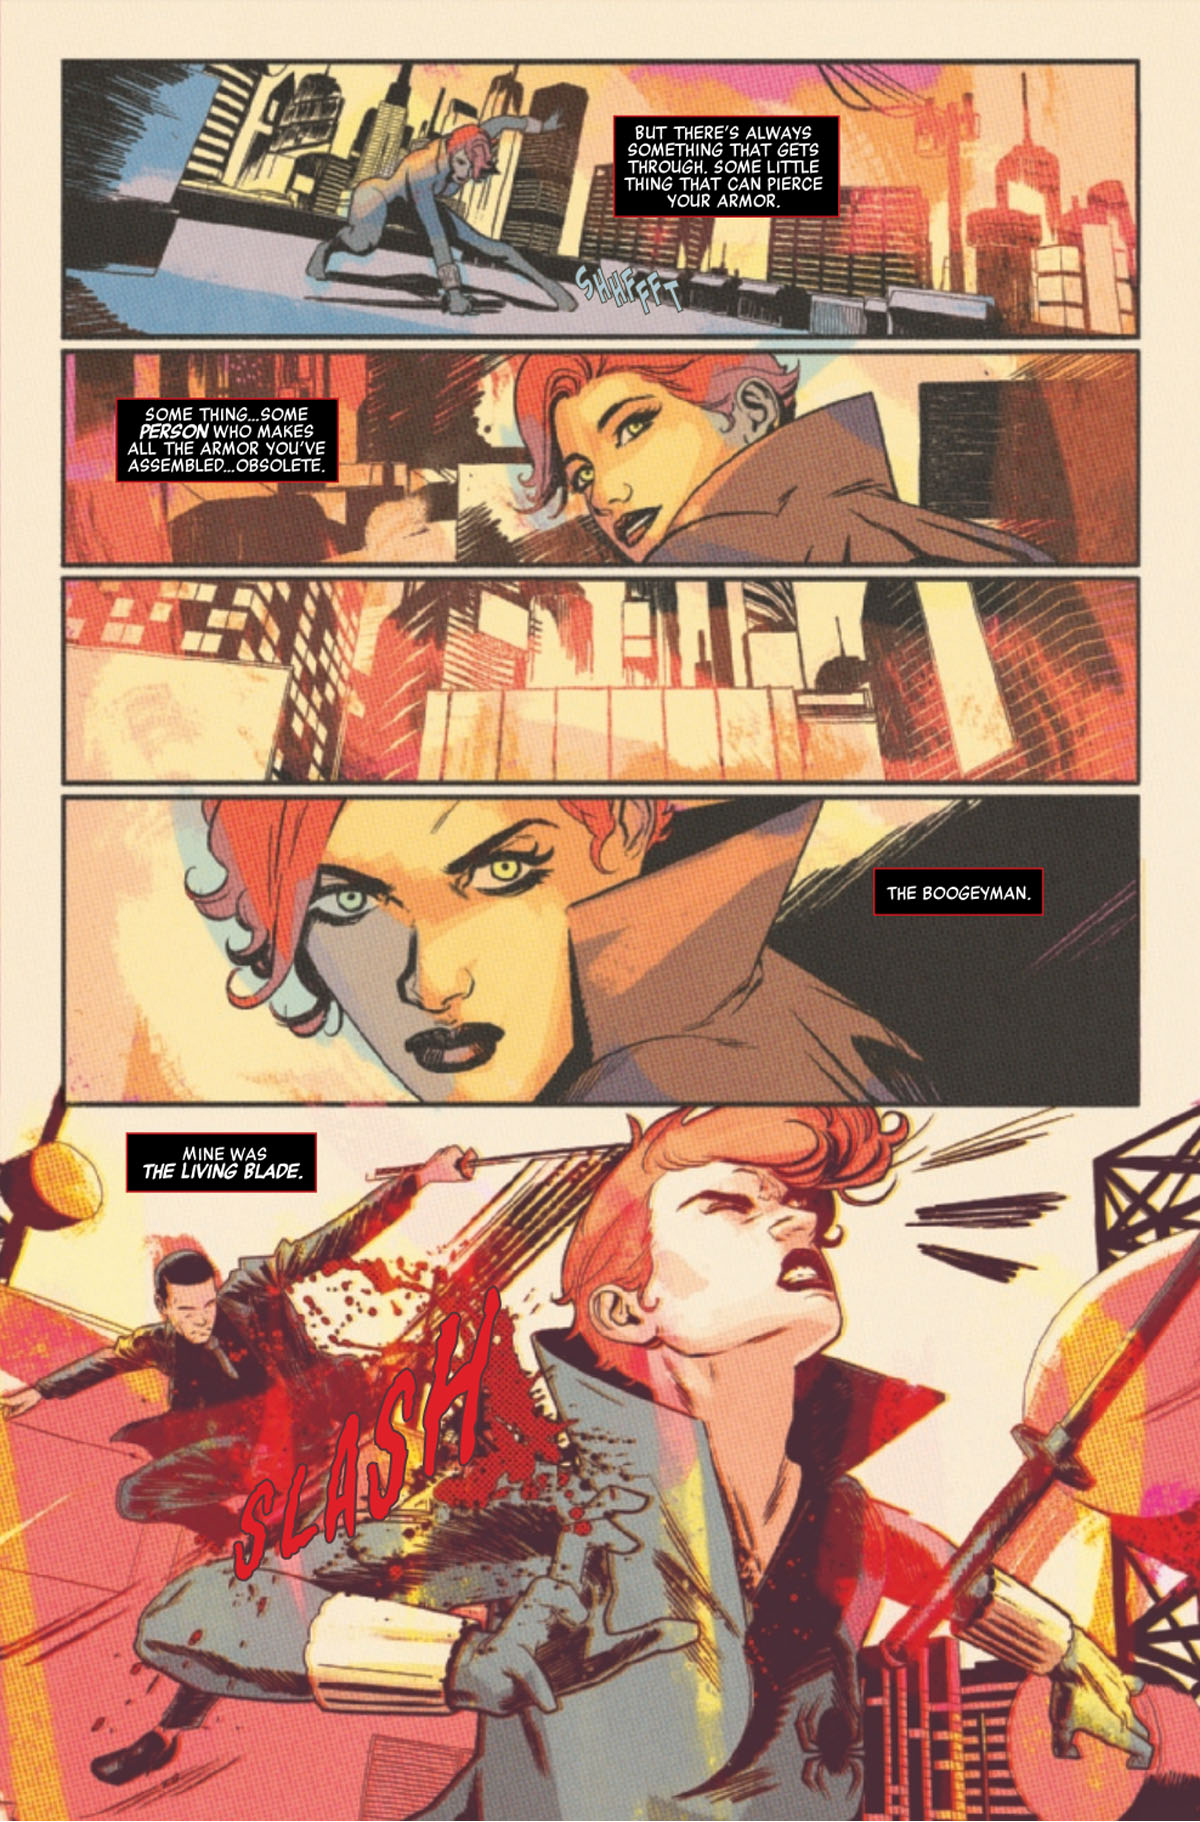 Black Widow #13 page 4